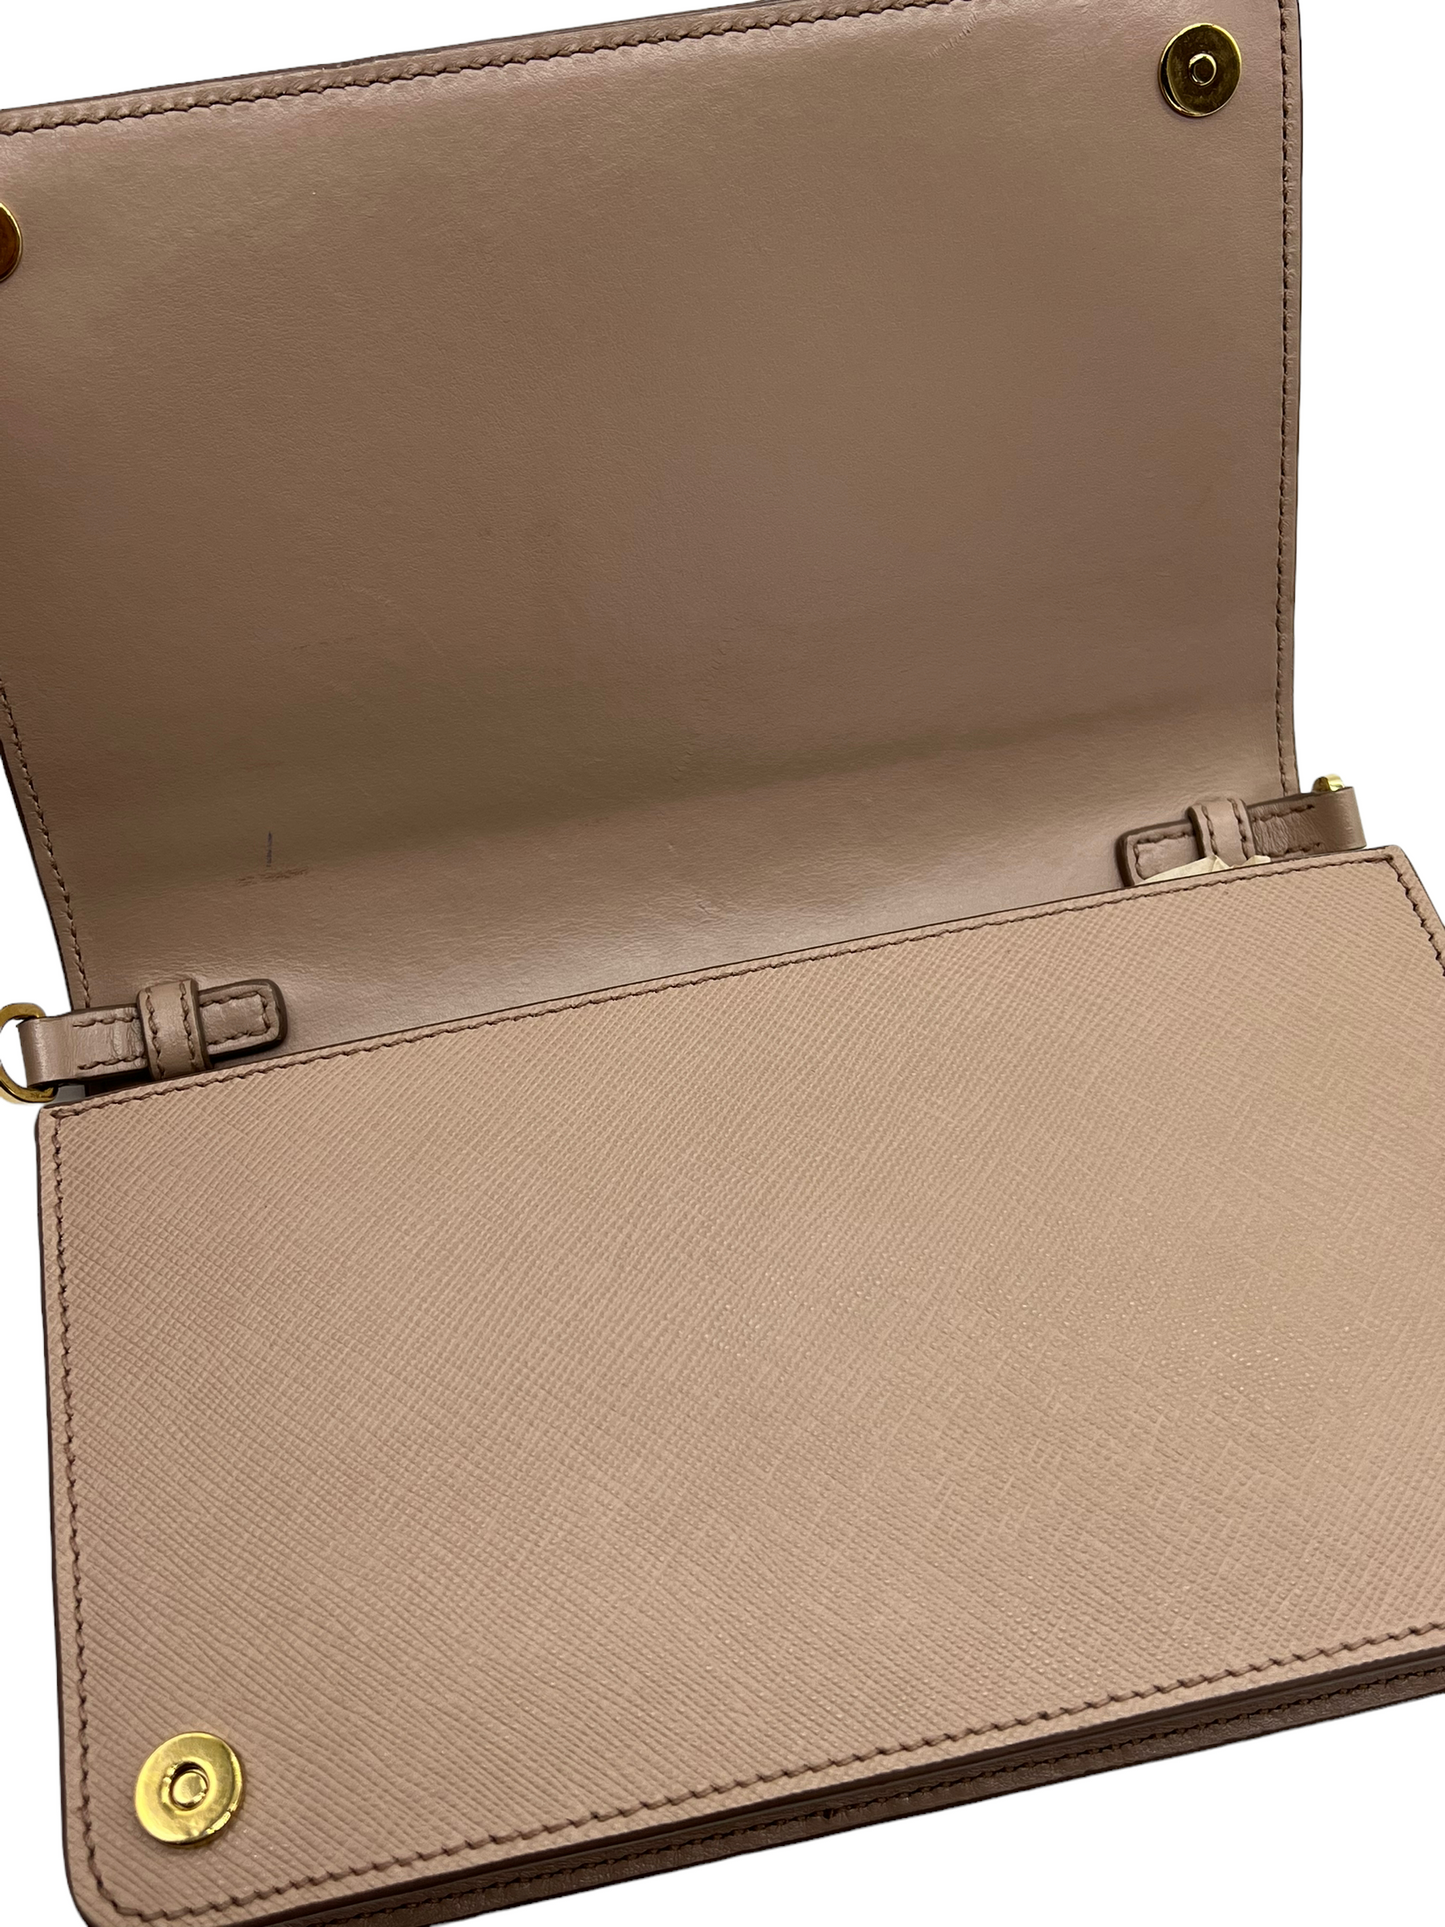 Prada Blush Saffiano Leather Chain Shoulder Bag